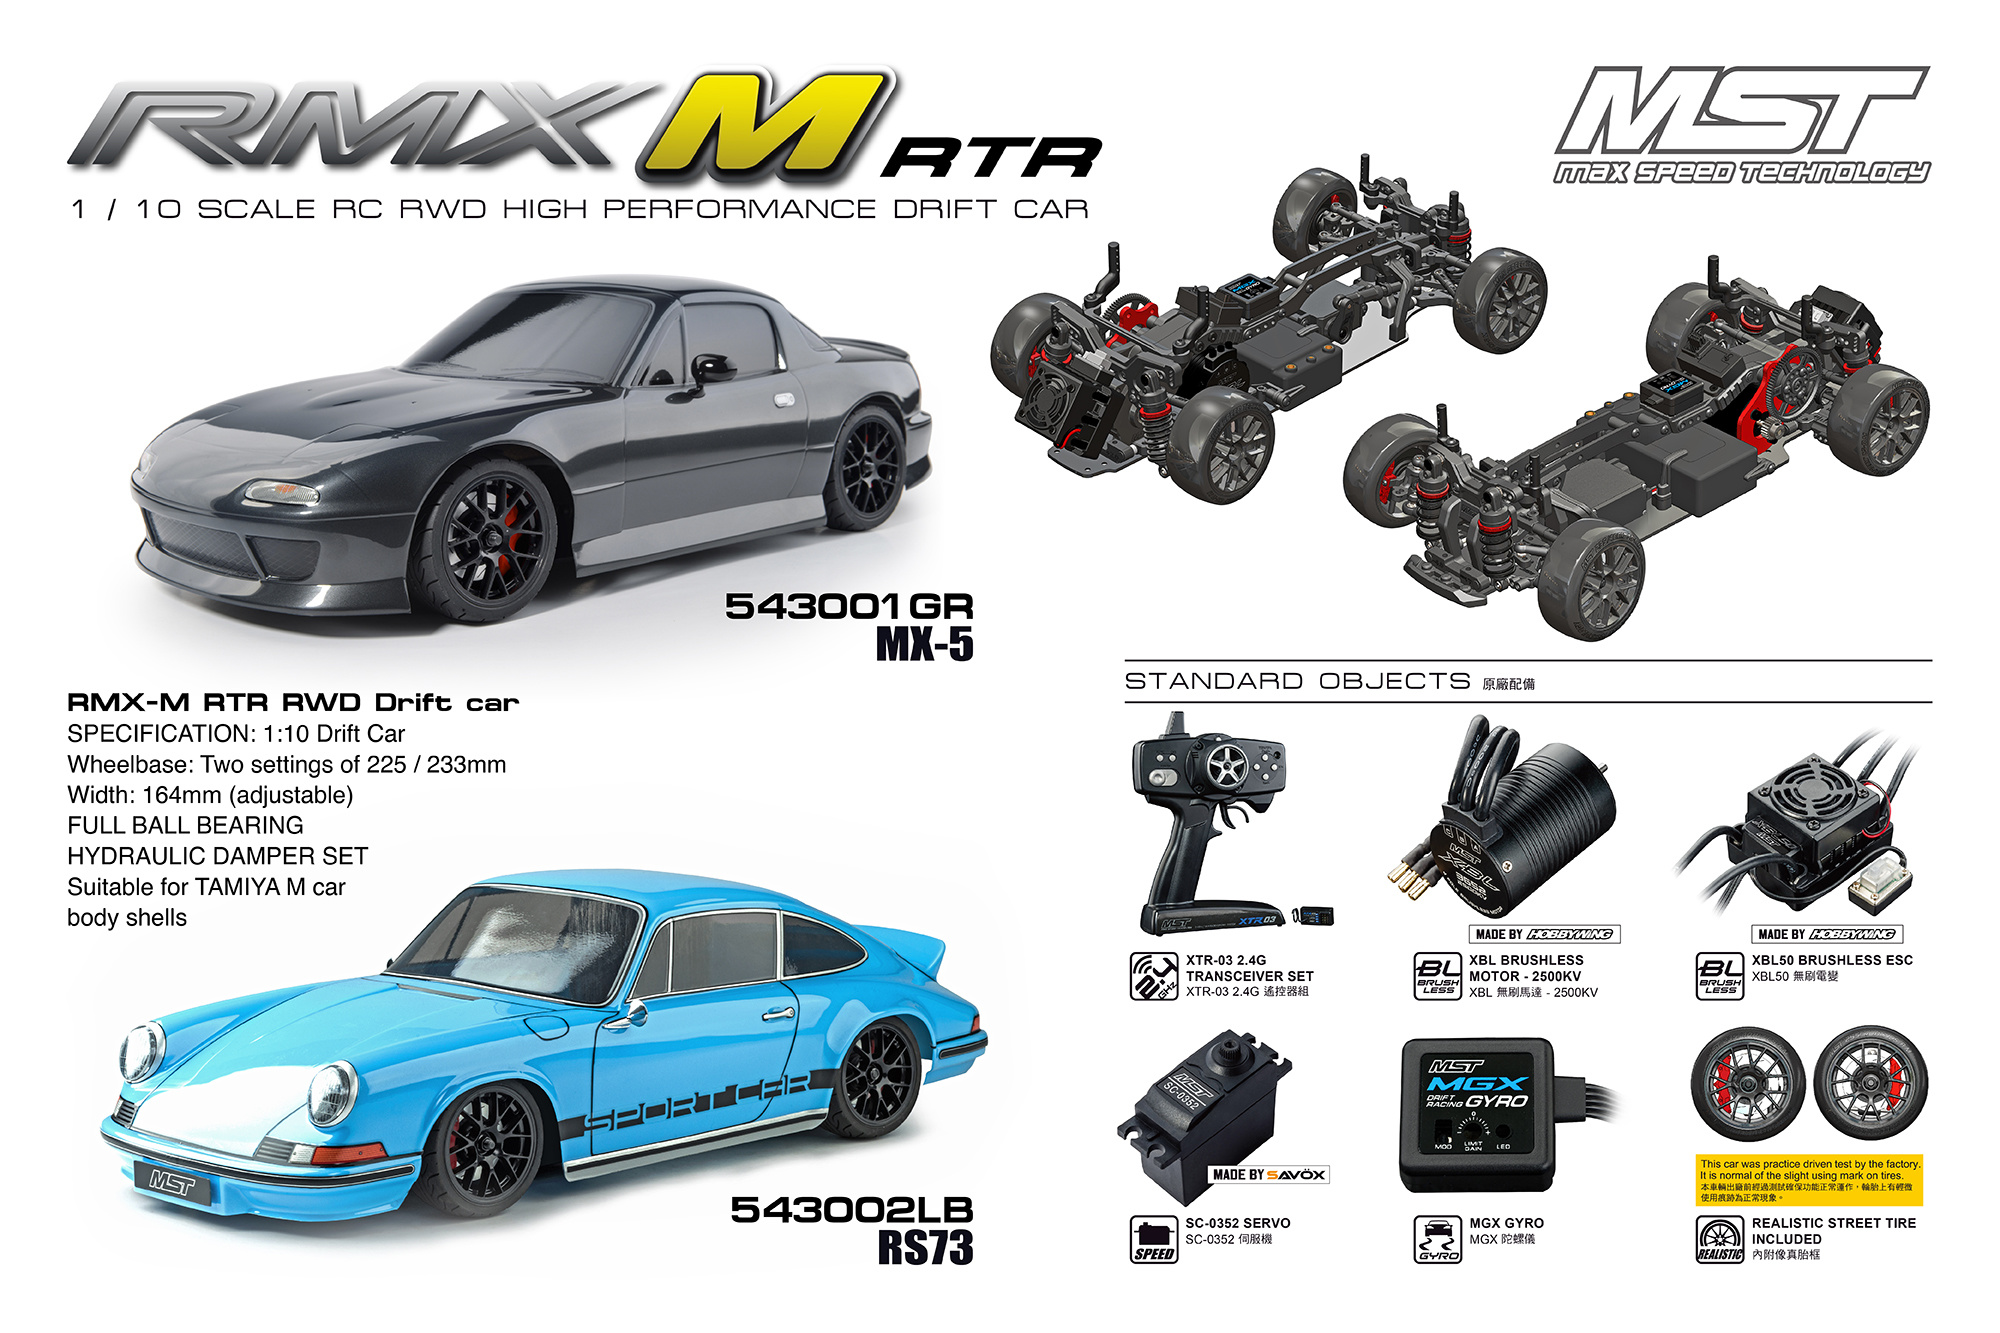 MST / 543002LB / RMX-M 2WD 1/10 Mini Drift Car RTR - Brushless / Body: RS73  (Porsche 911 Carrera RS) - Light Blue - Drifted